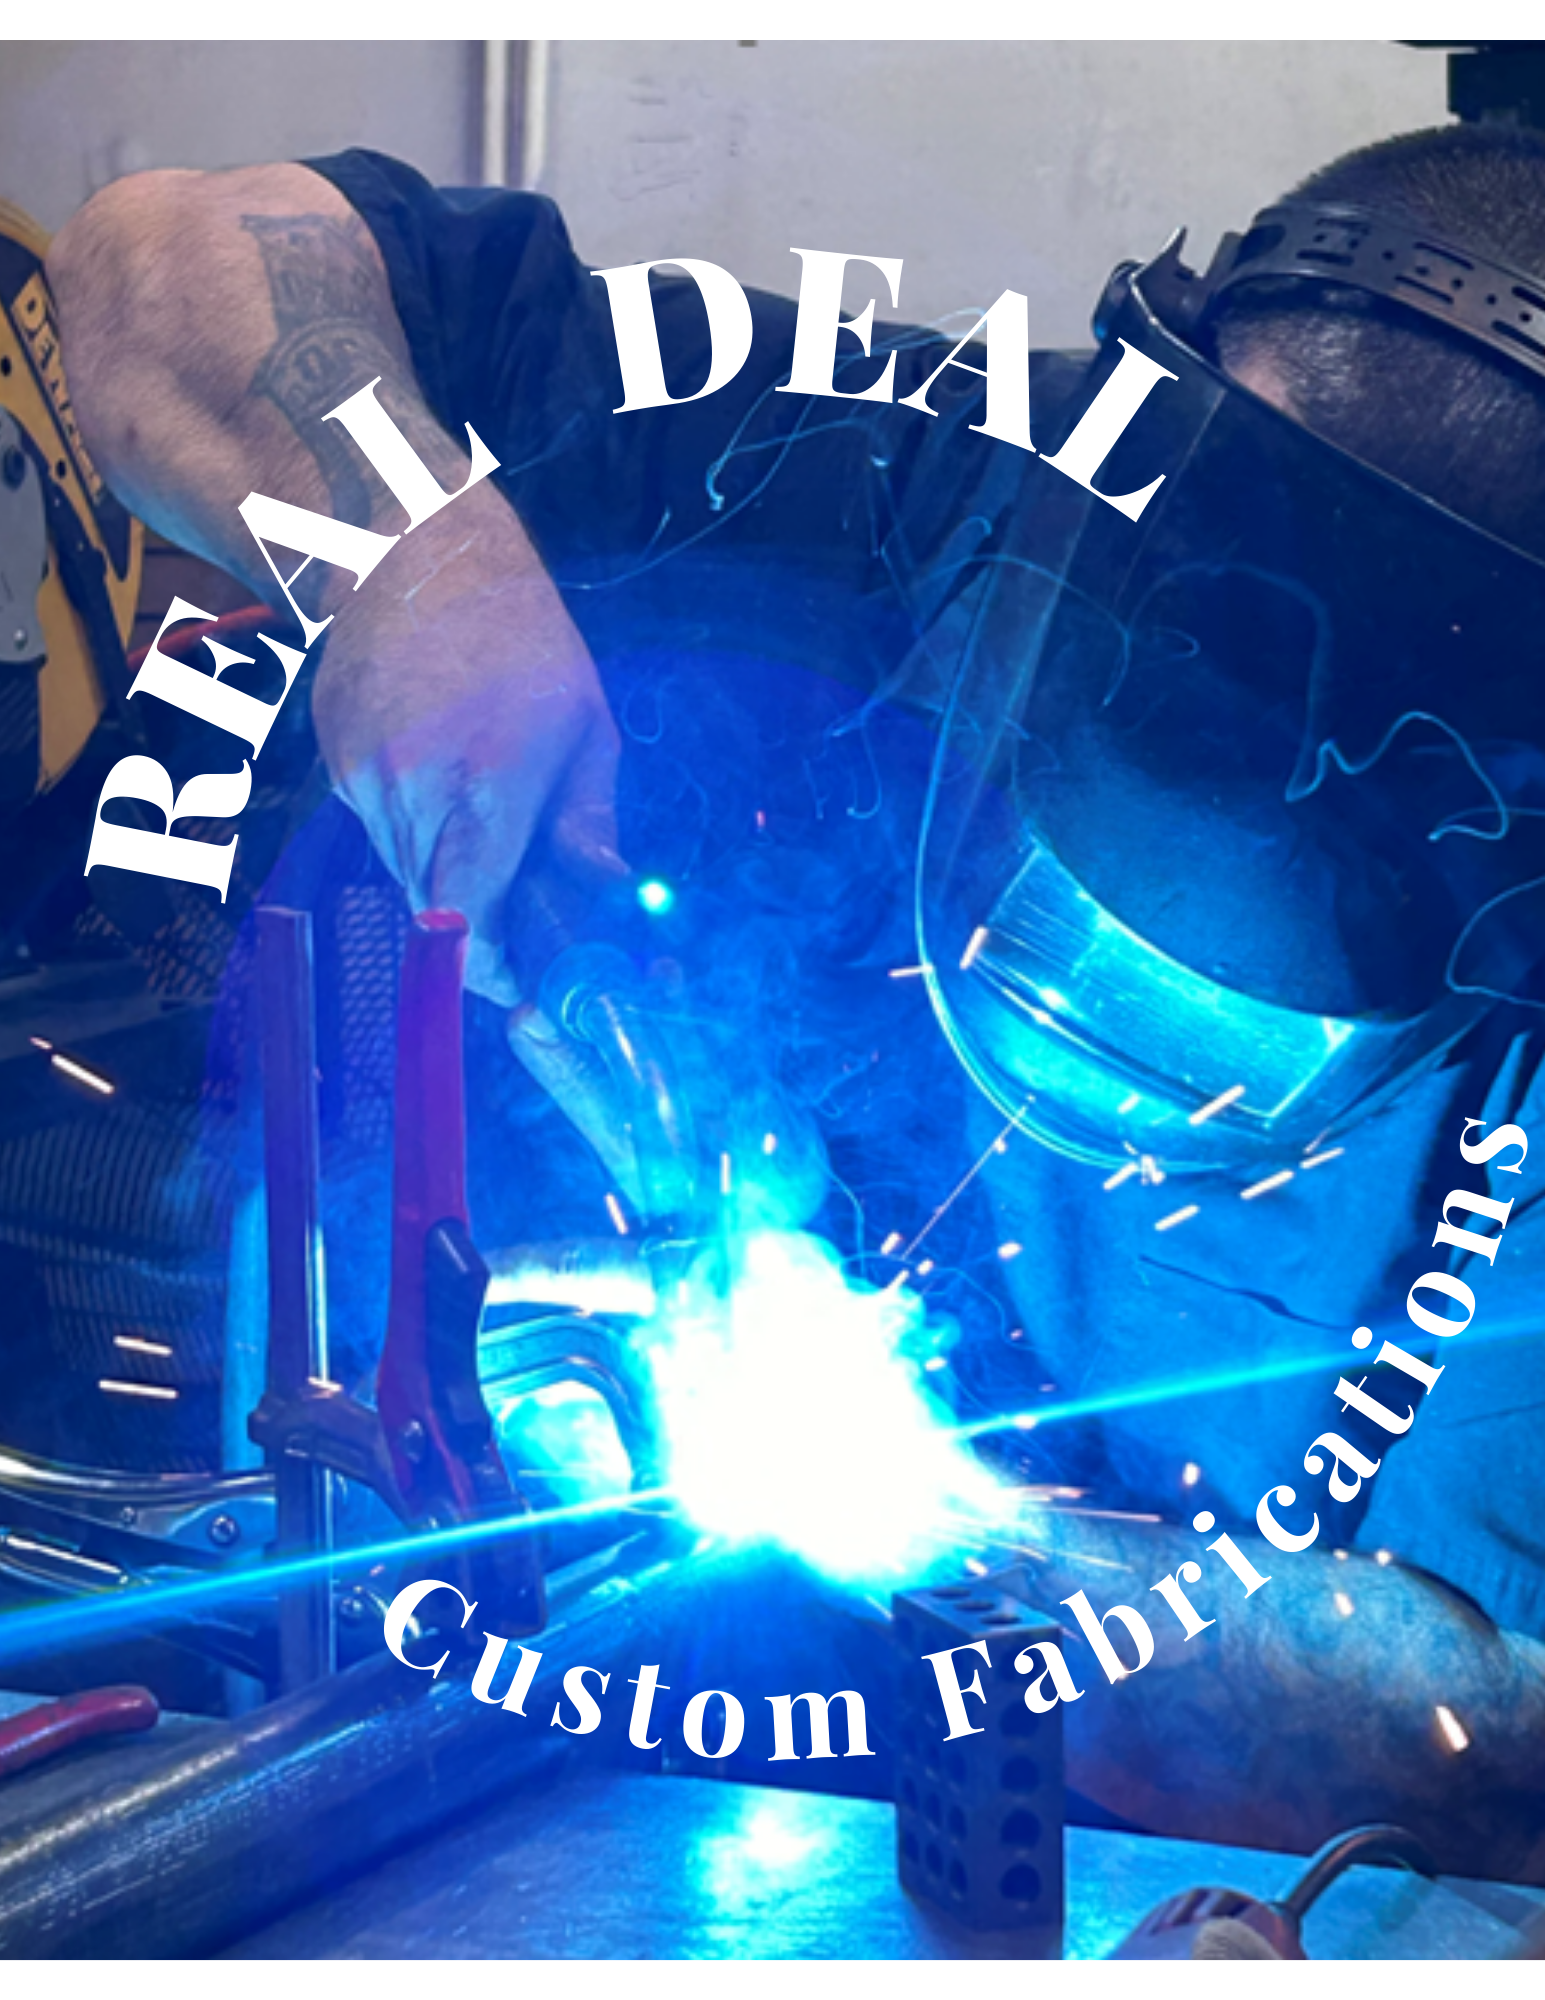 Real Deal Custom Fabrications